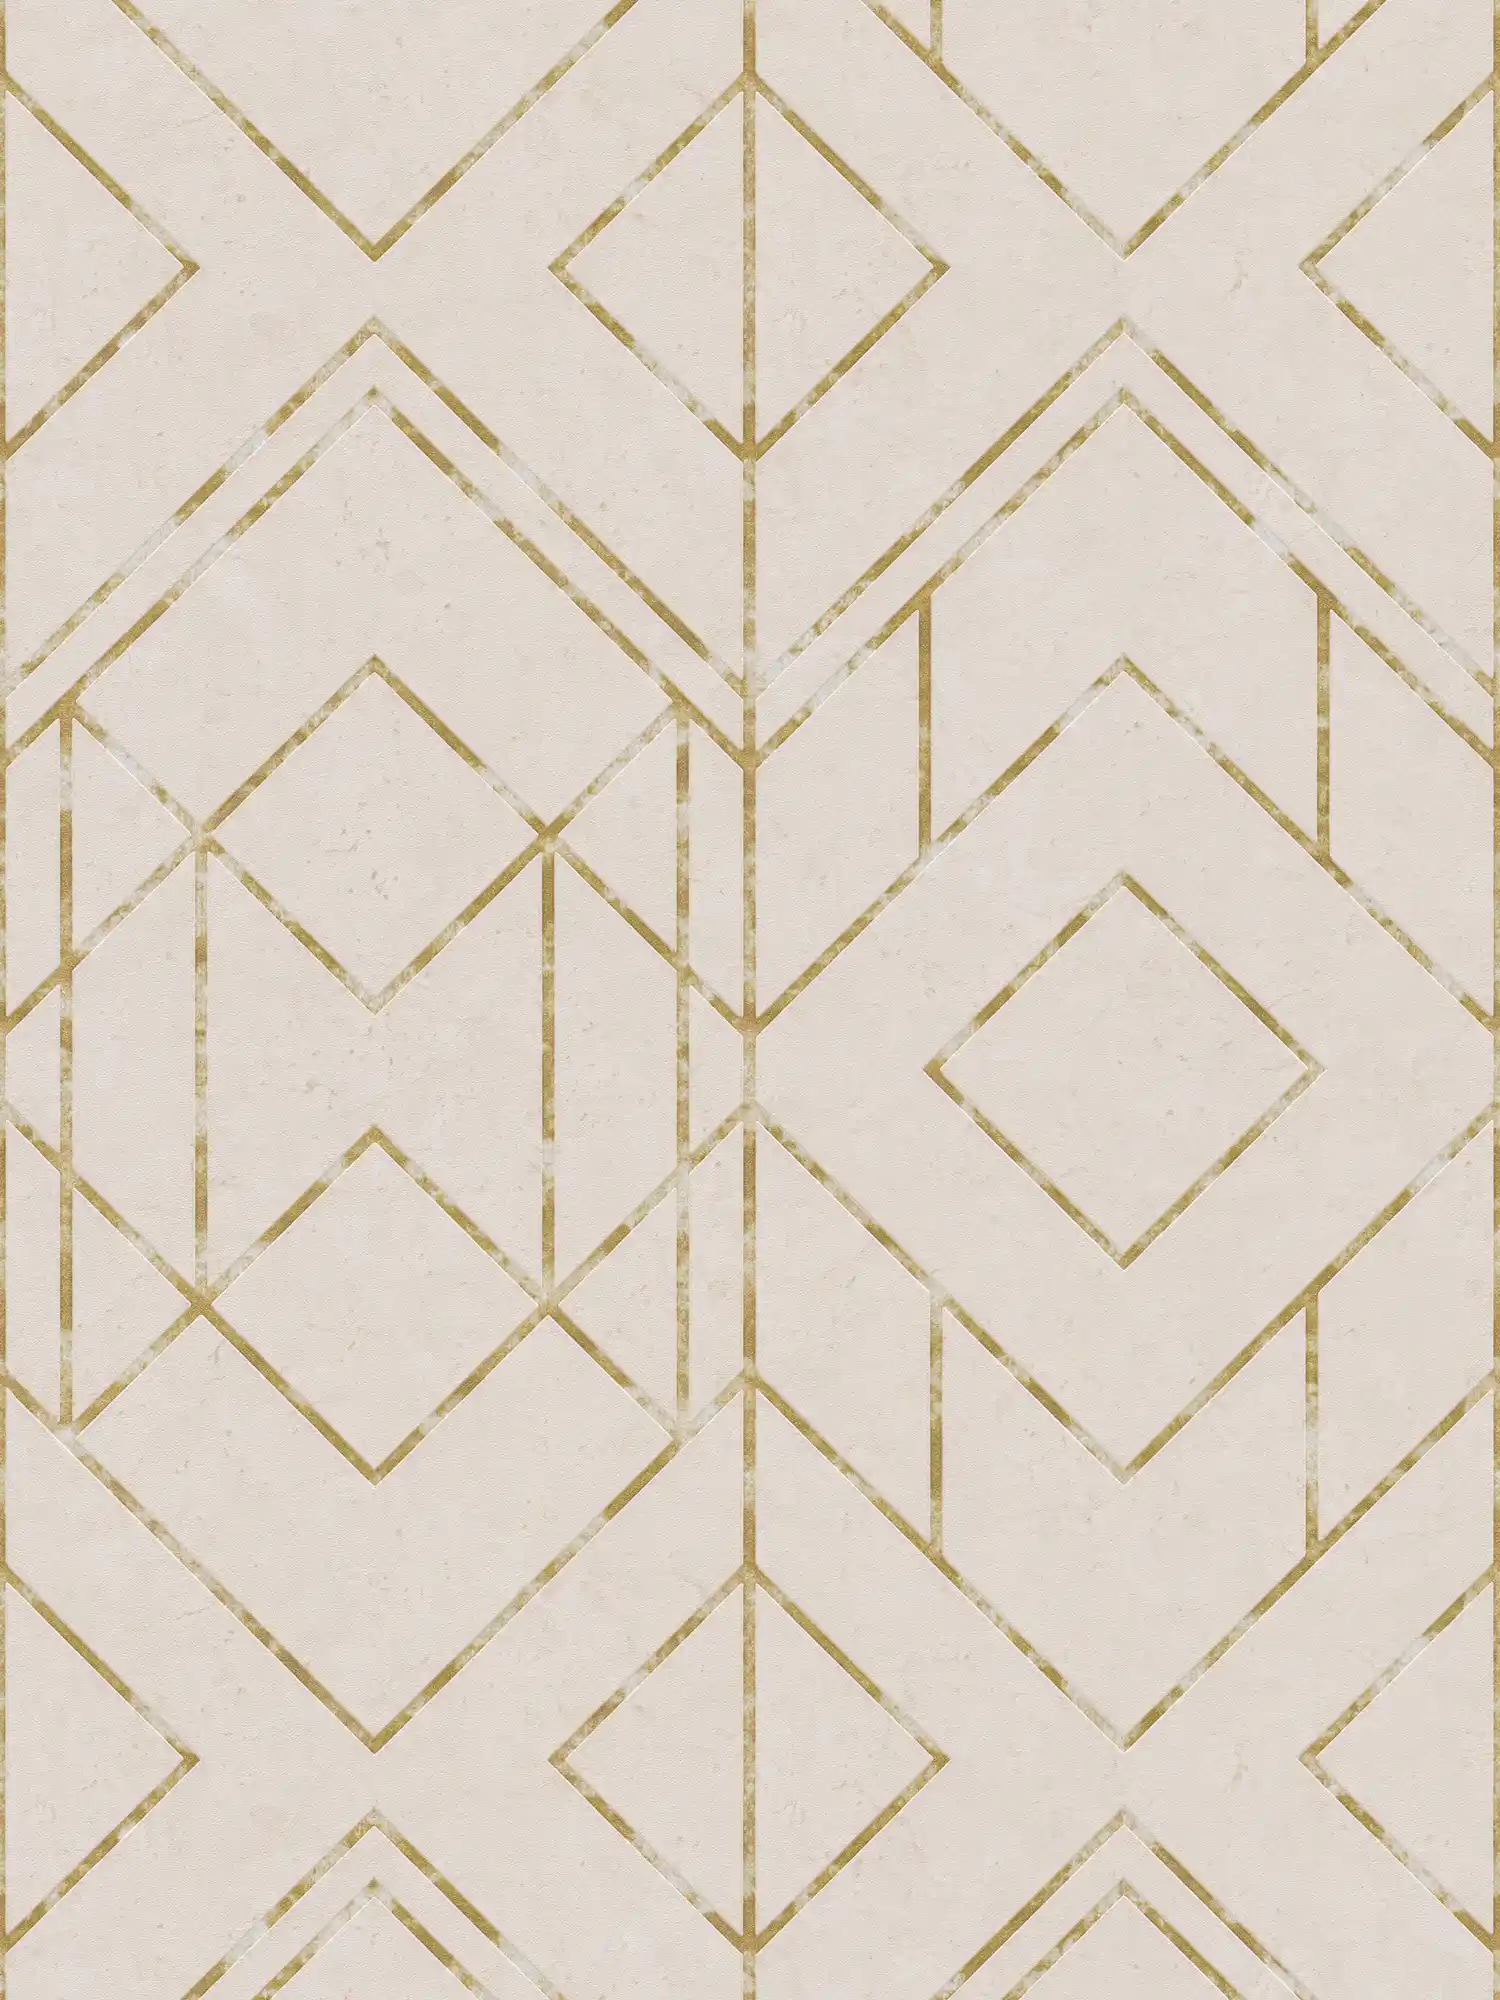 Non-woven wallpaper with metallic effect & graphic design - beige, metallic
